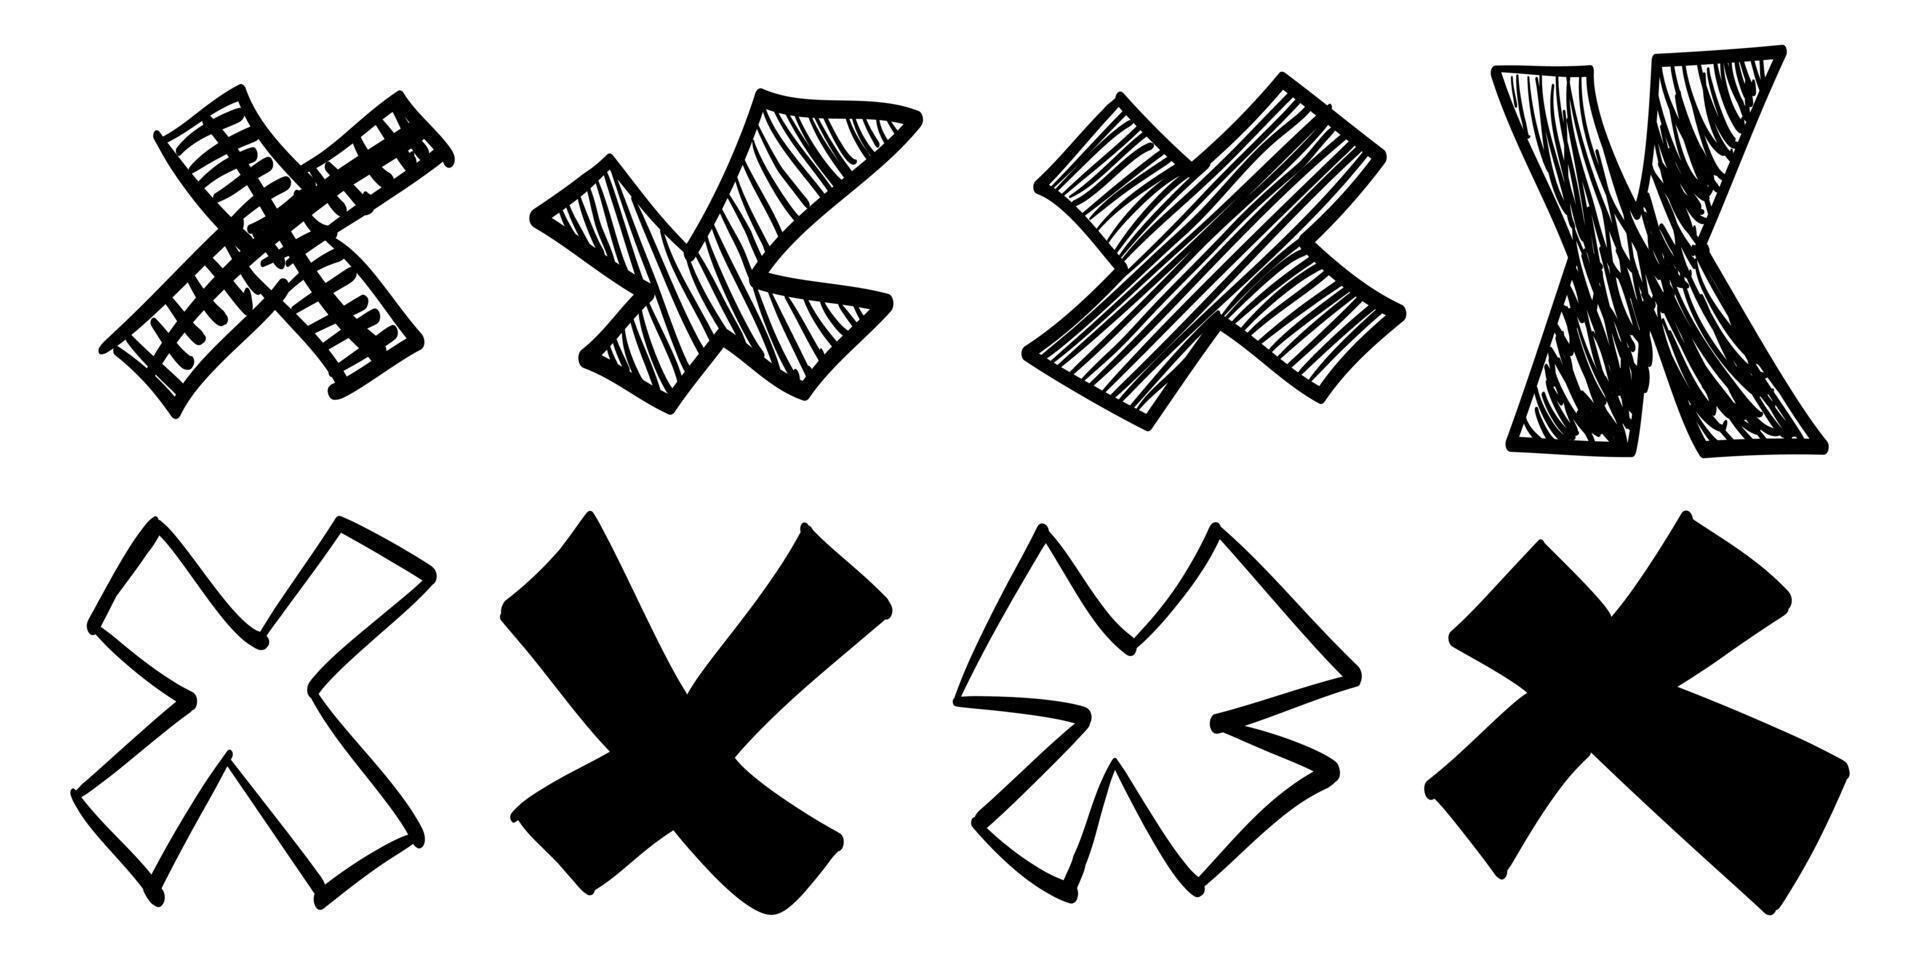 Hand drawn cross mark. doodle set of wrong sign or false mark vector